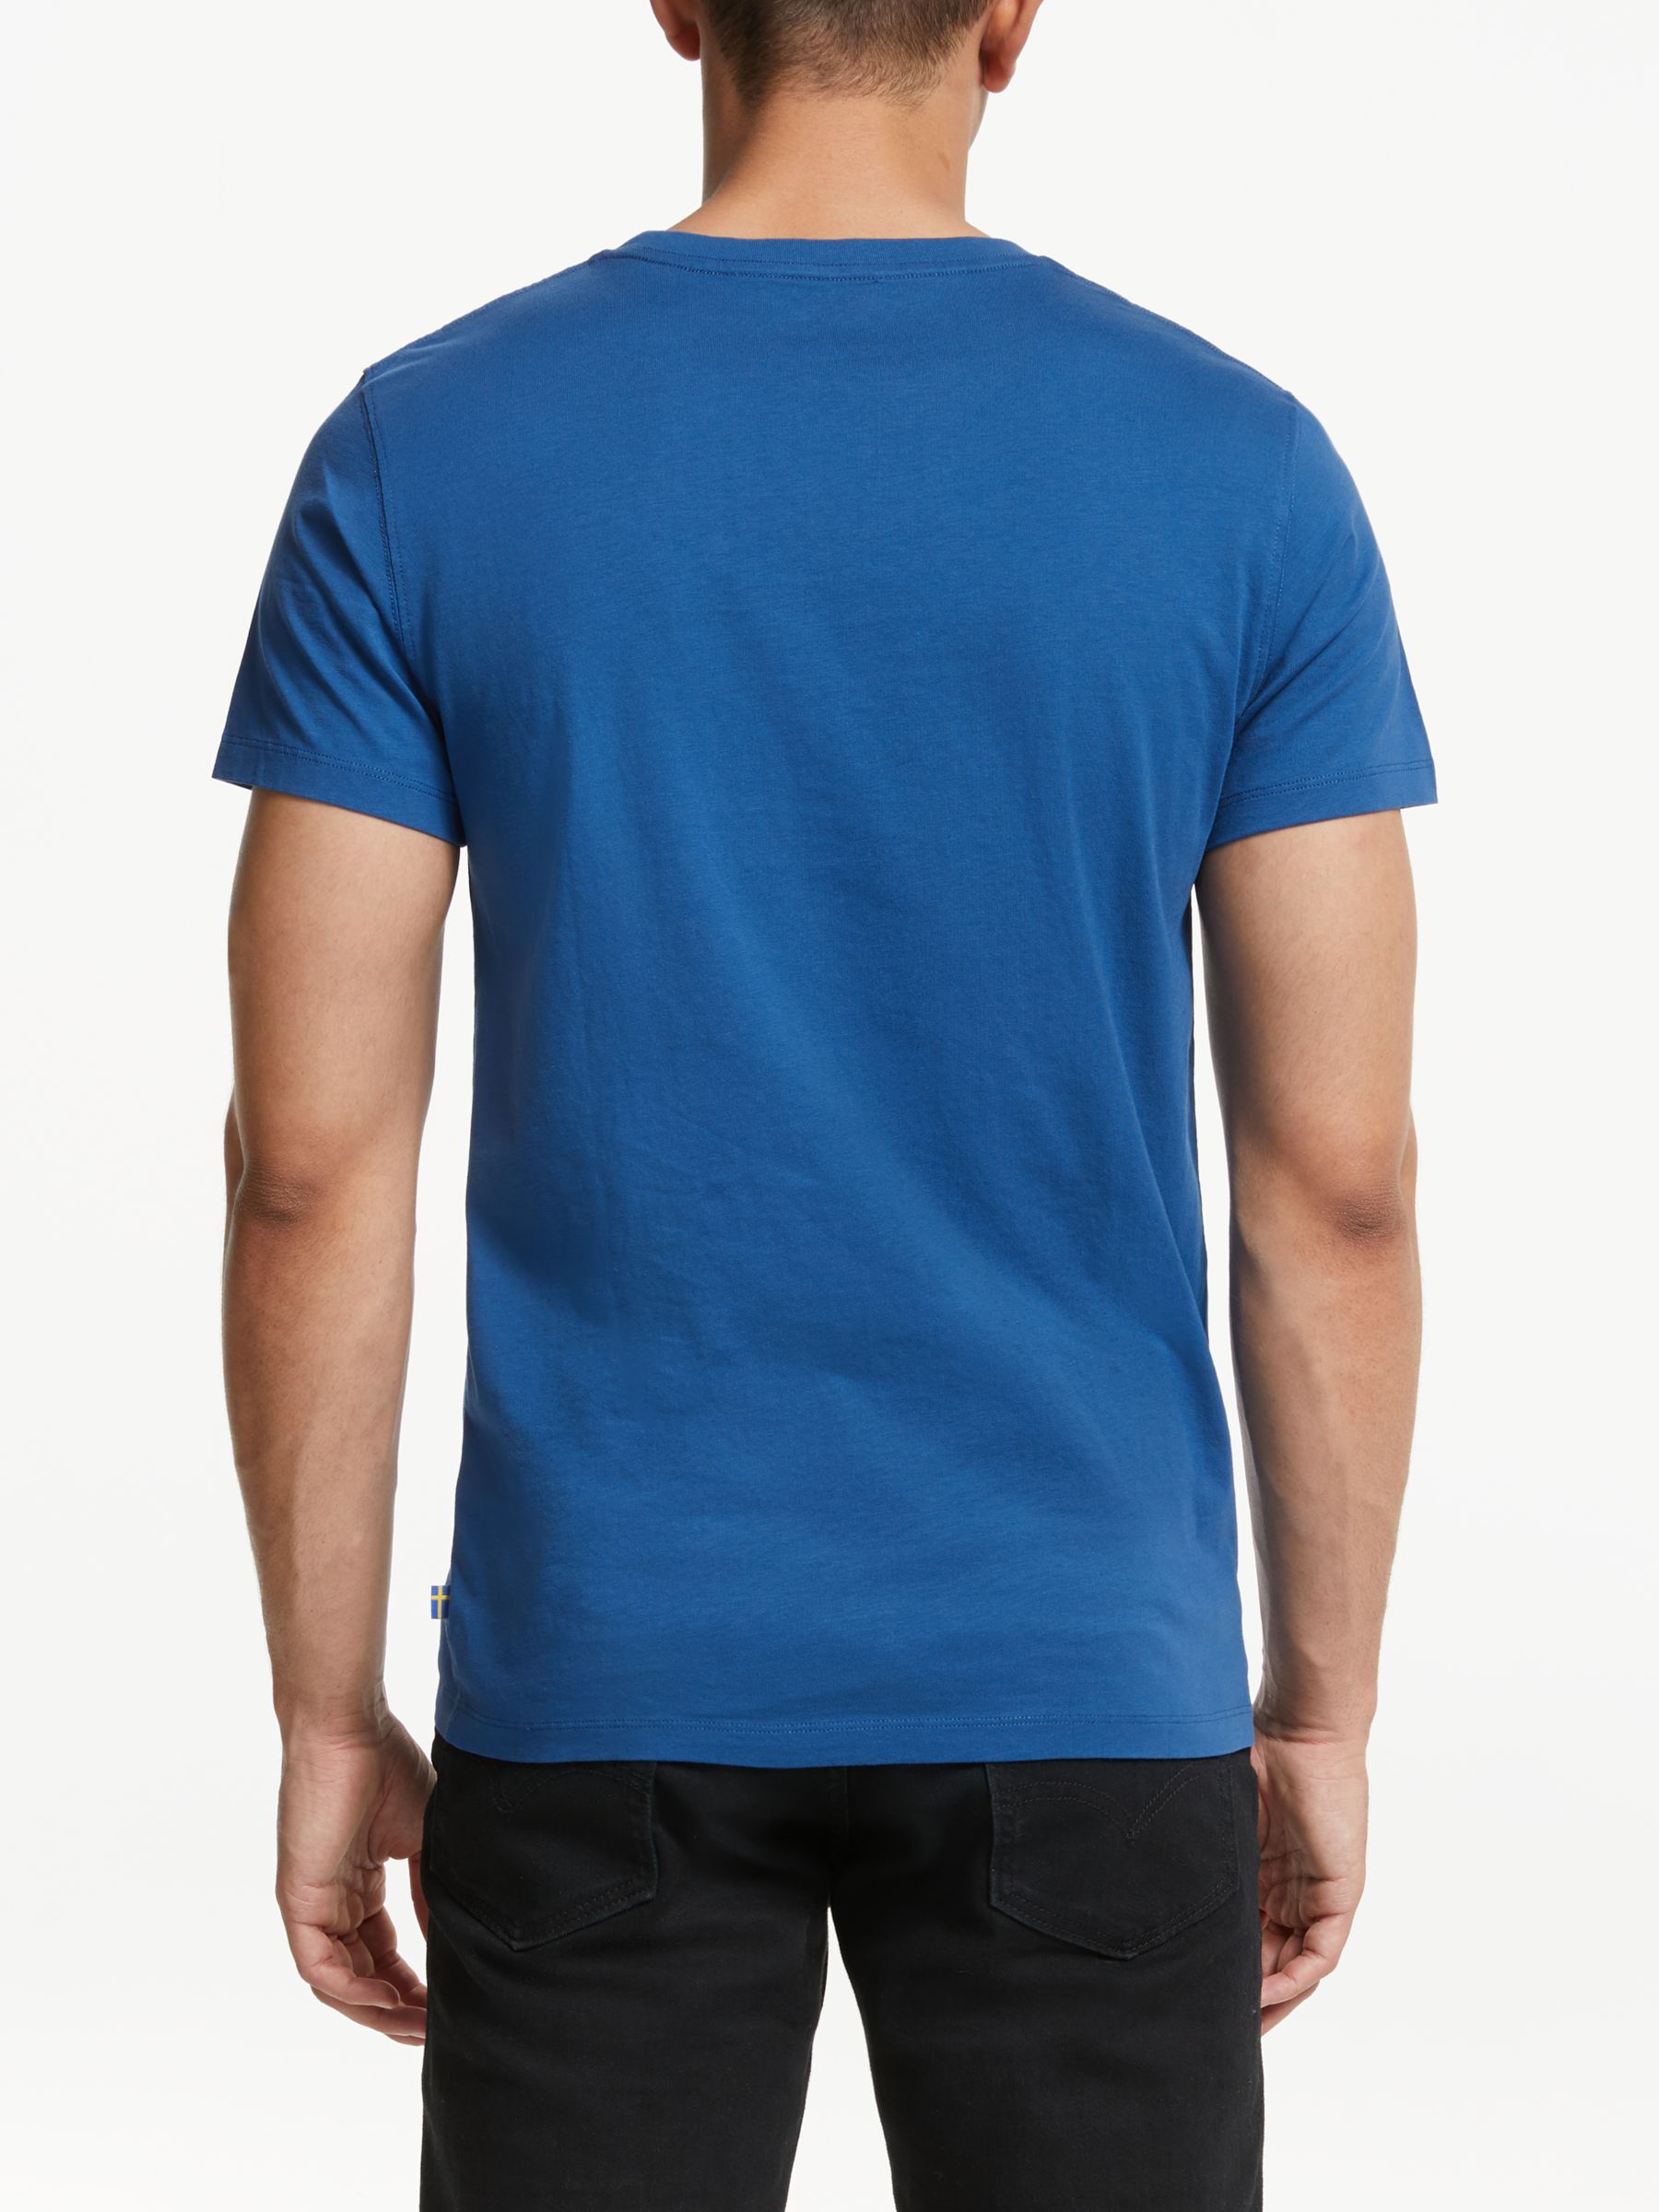 Mode Shirts Sportshirts Swedish Fall Sportshirt blauw-wit atletische stijl 